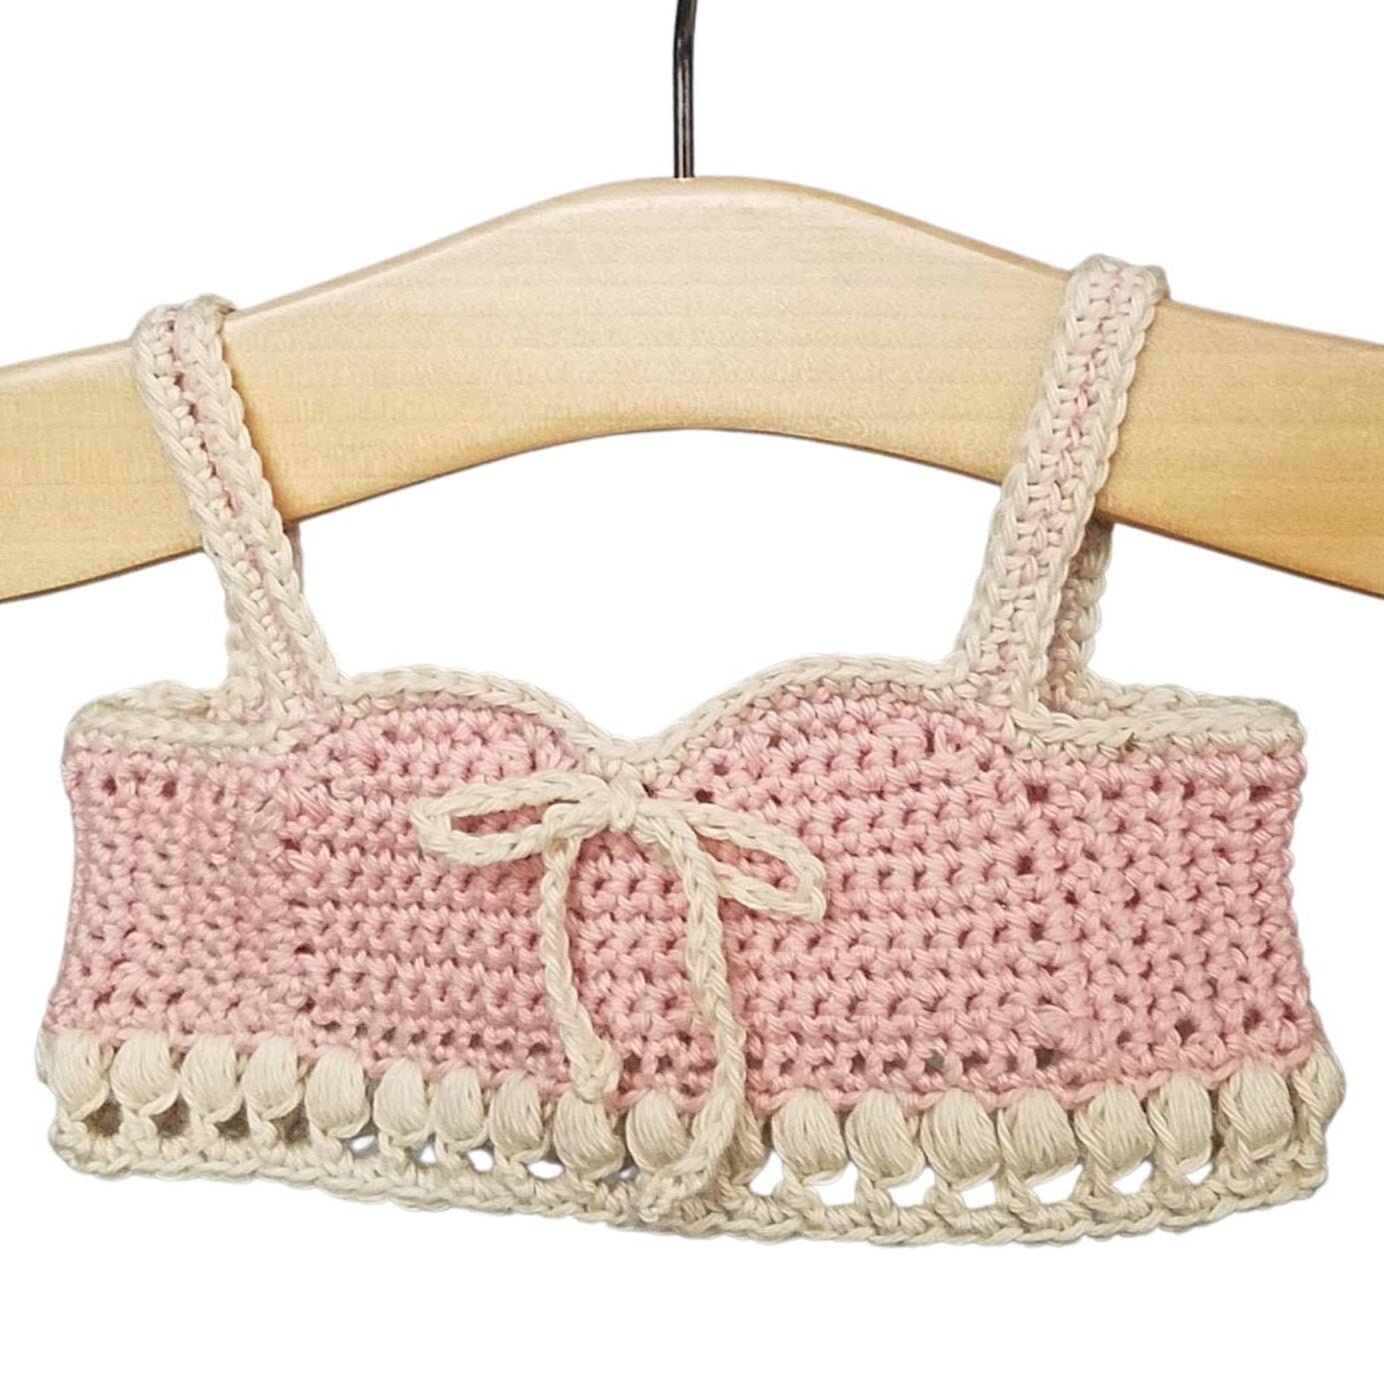 Infant / Toddler Crochet Top Pattern - Geranium - Mermaidcat Designs